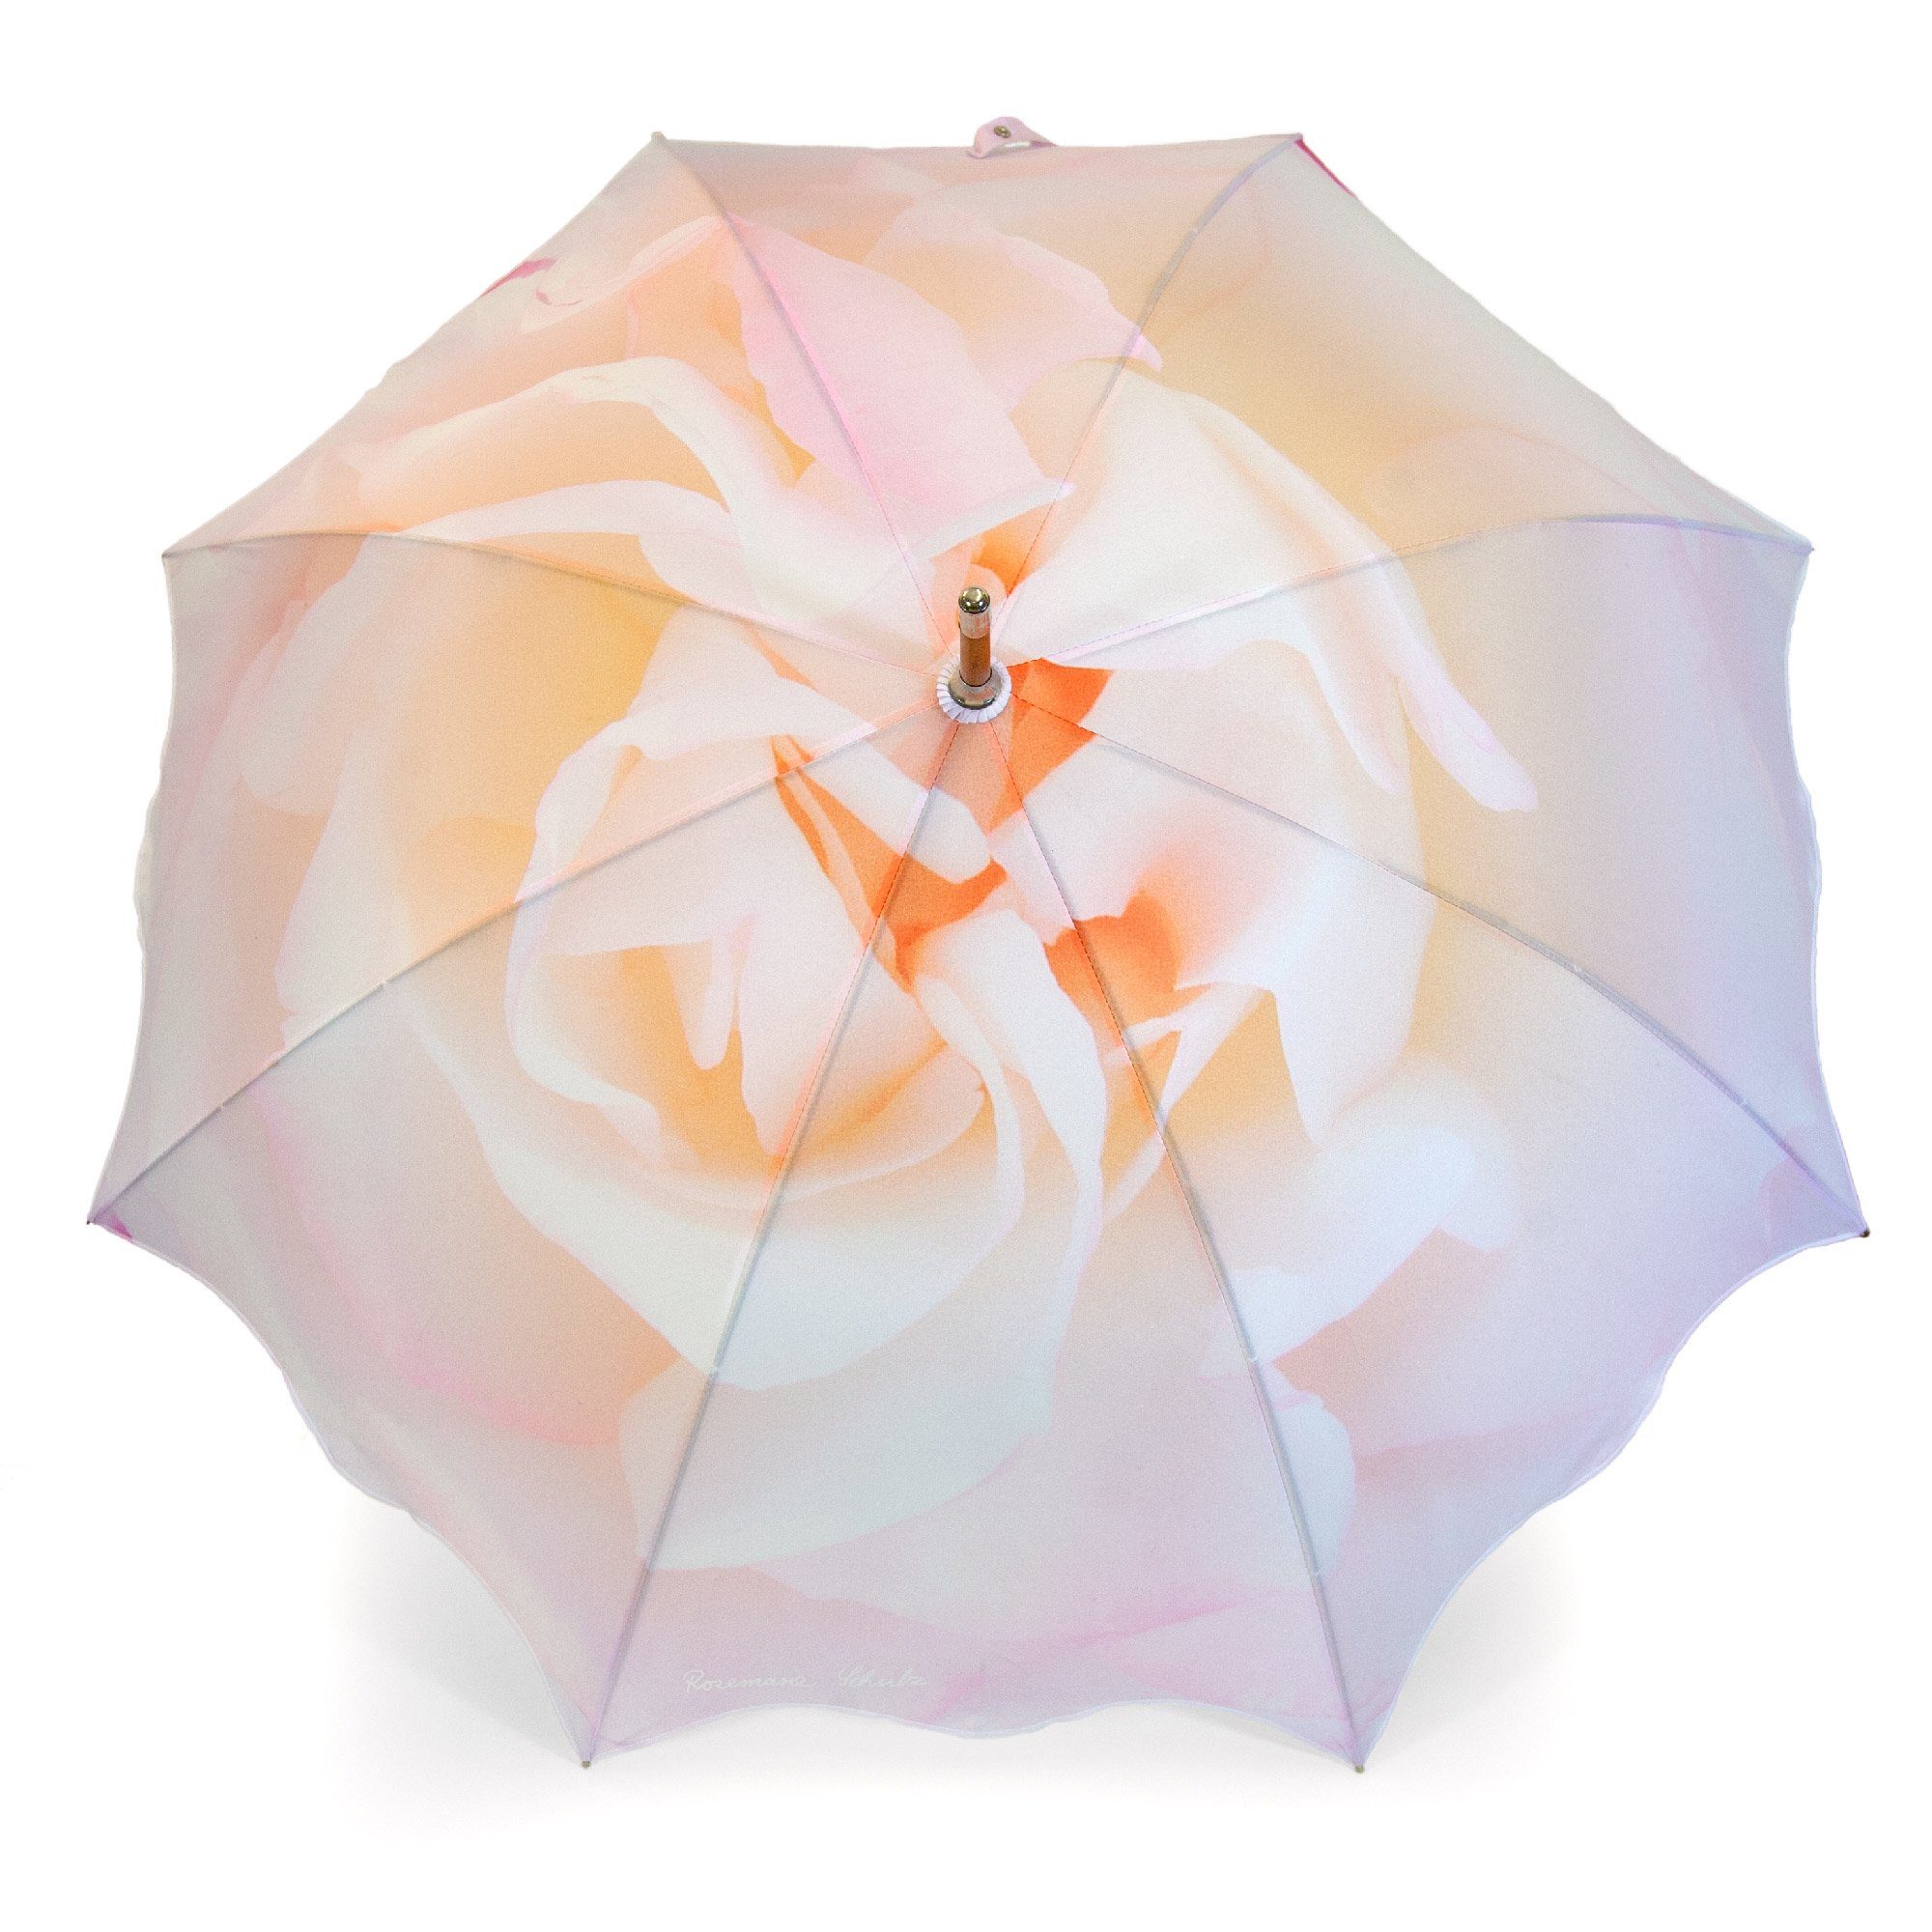 ROSEMARIE SCHULZ Heidelberg Stockregenschirm Stockschirm Motiv Rose Regenschirm für Damen champagner